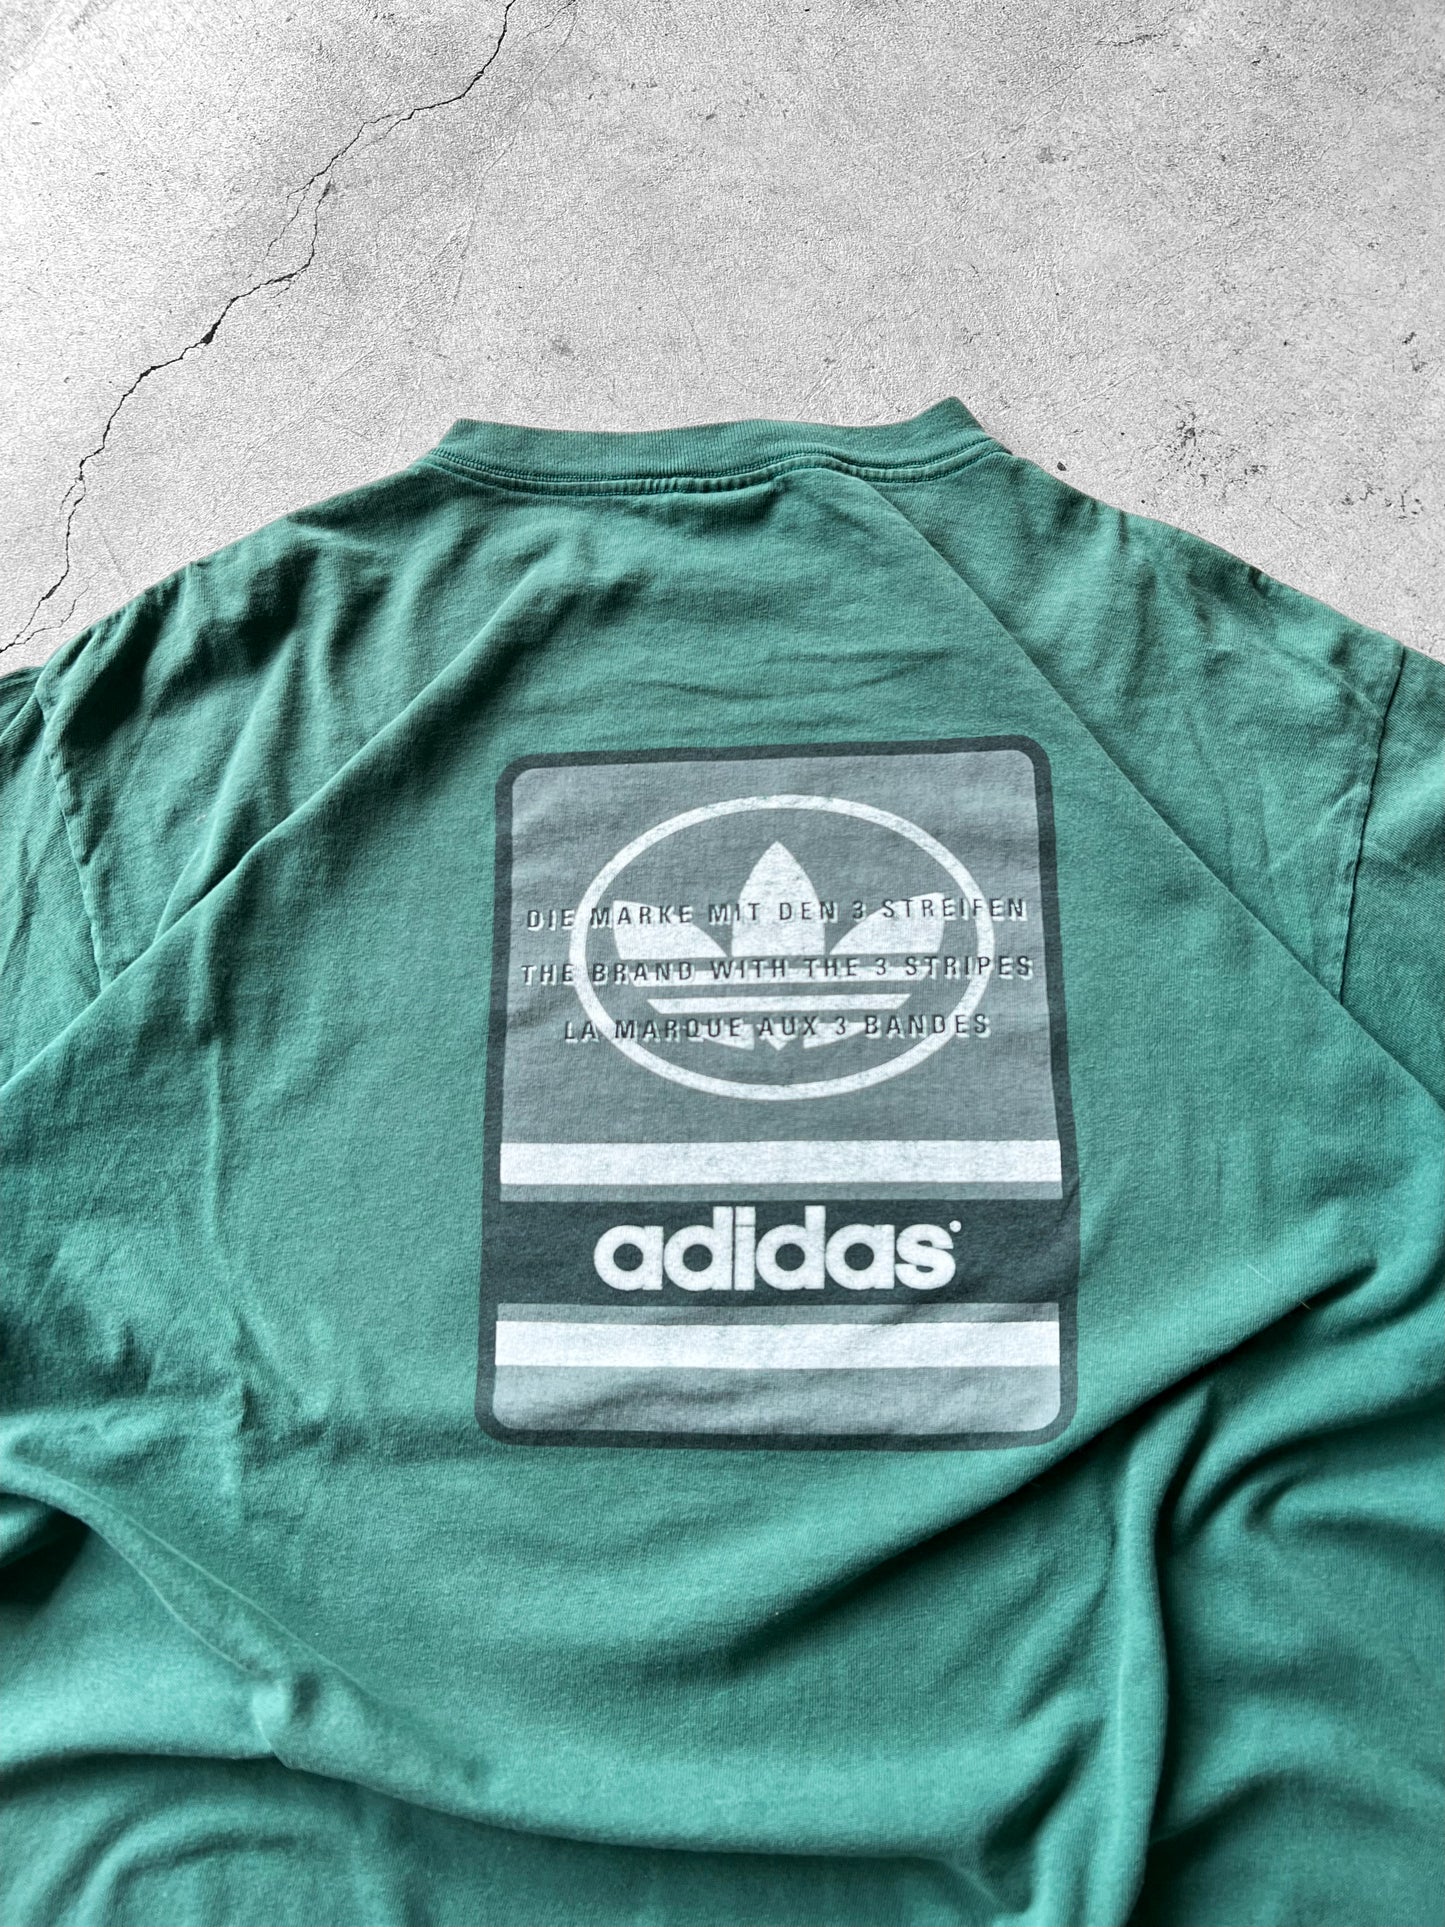 90’s Adidas Shirt - L